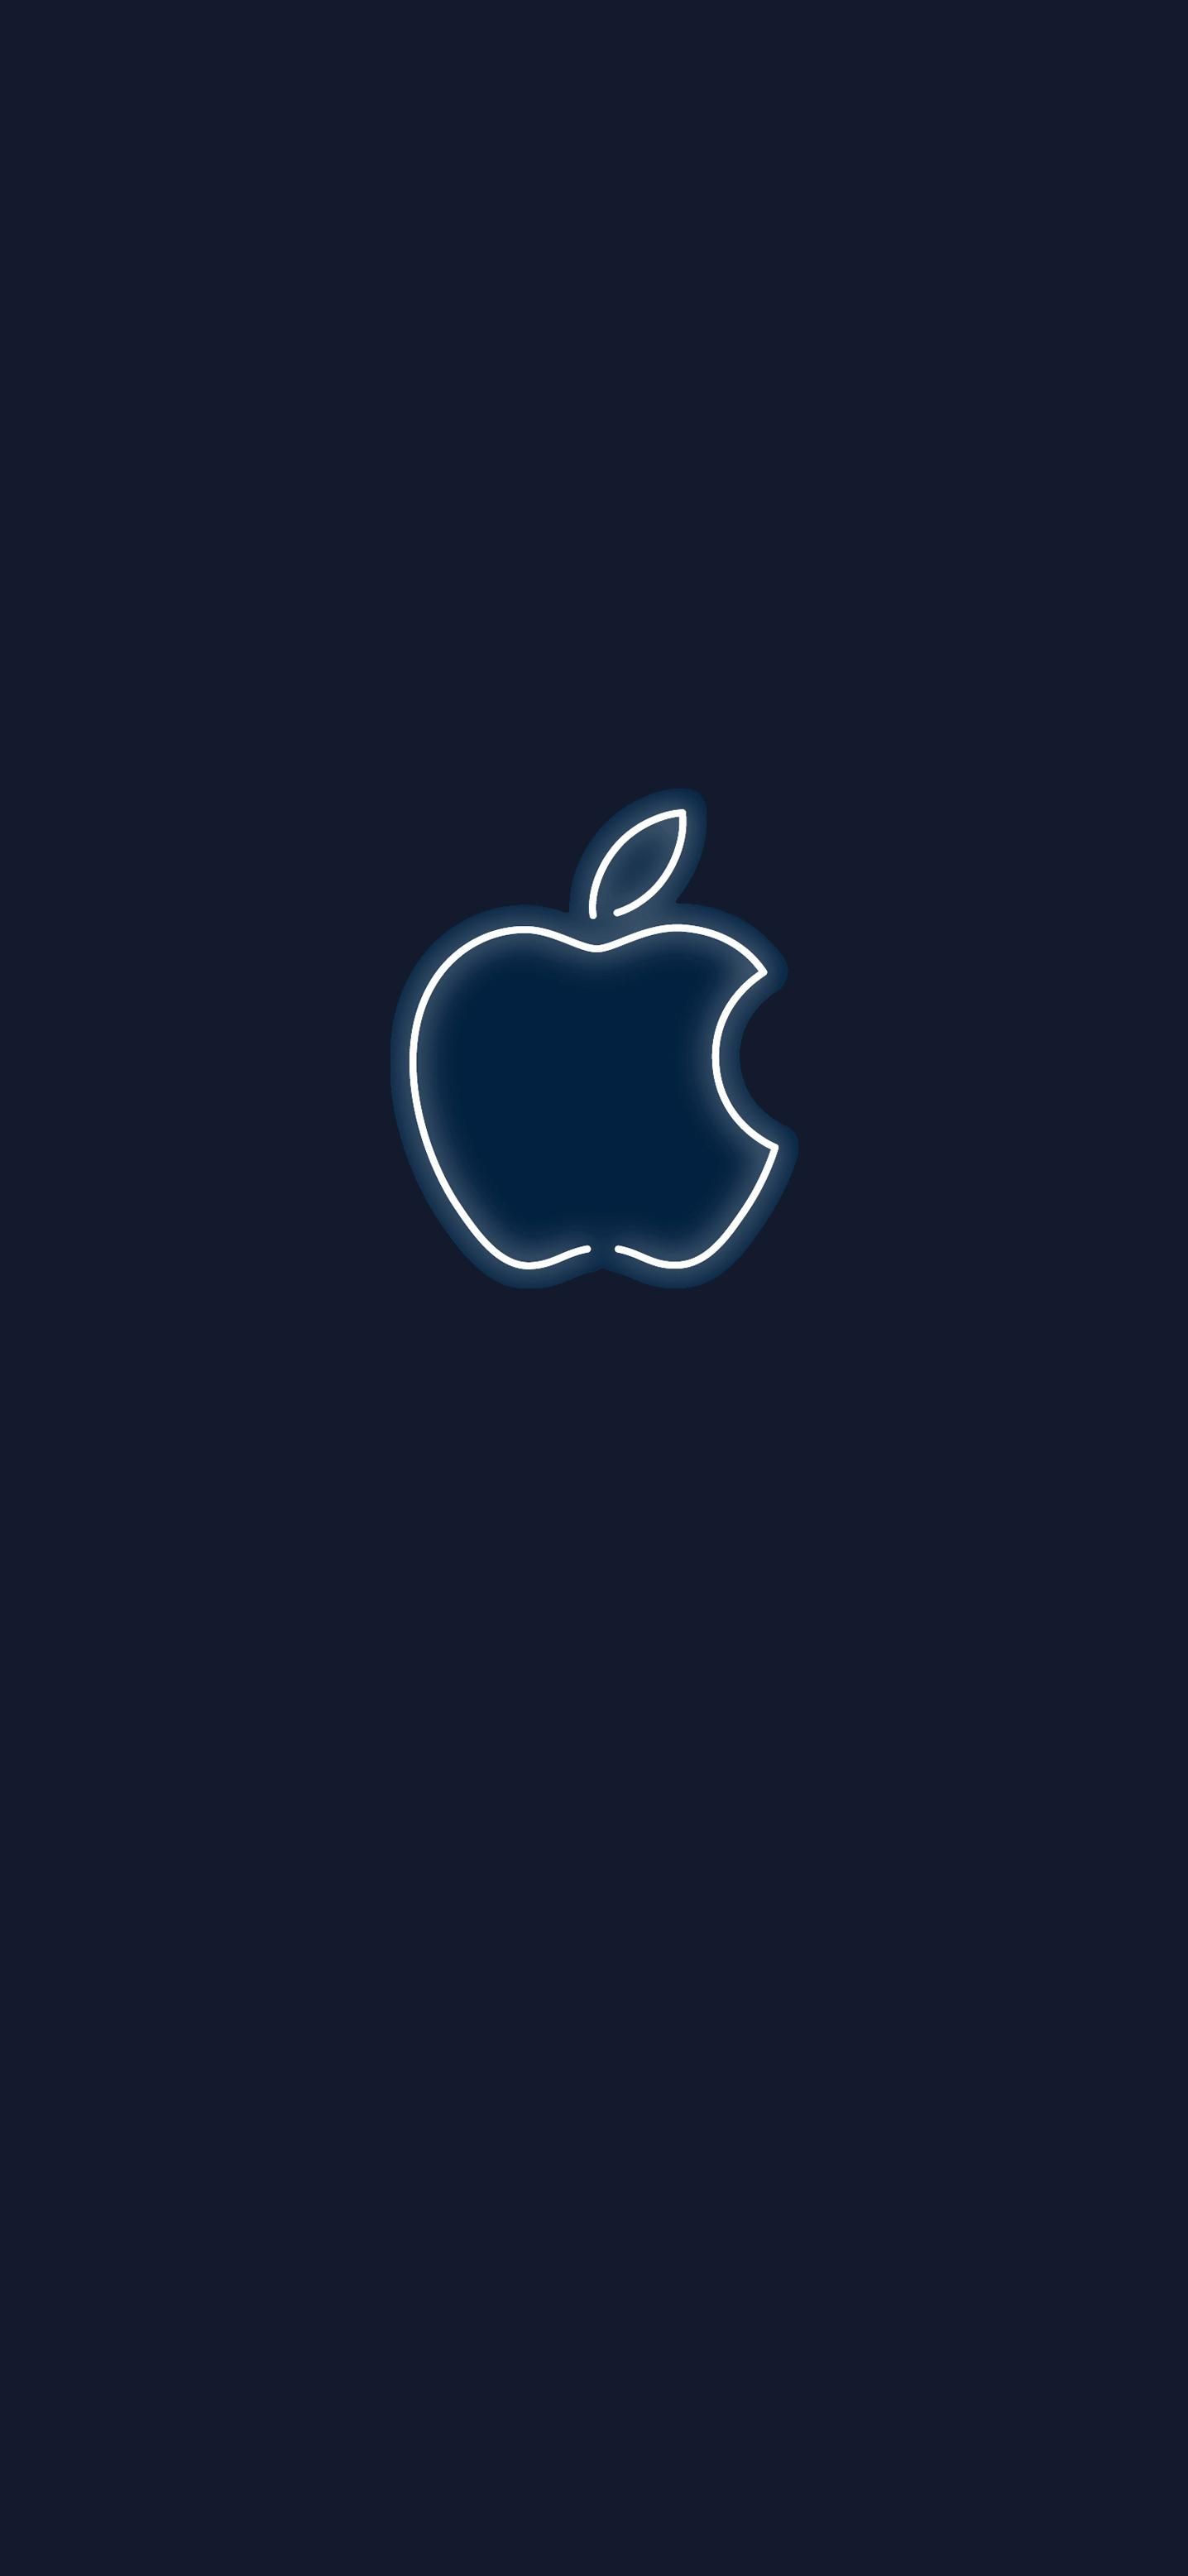 HQ Apple Logo Wallpaper (neon). iPhone Wallpaper #falliphonewallpaper HQ Apple Logo Wallpaper (ne. Apple logo wallpaper, Apple logo wallpaper iphone, Apple logo